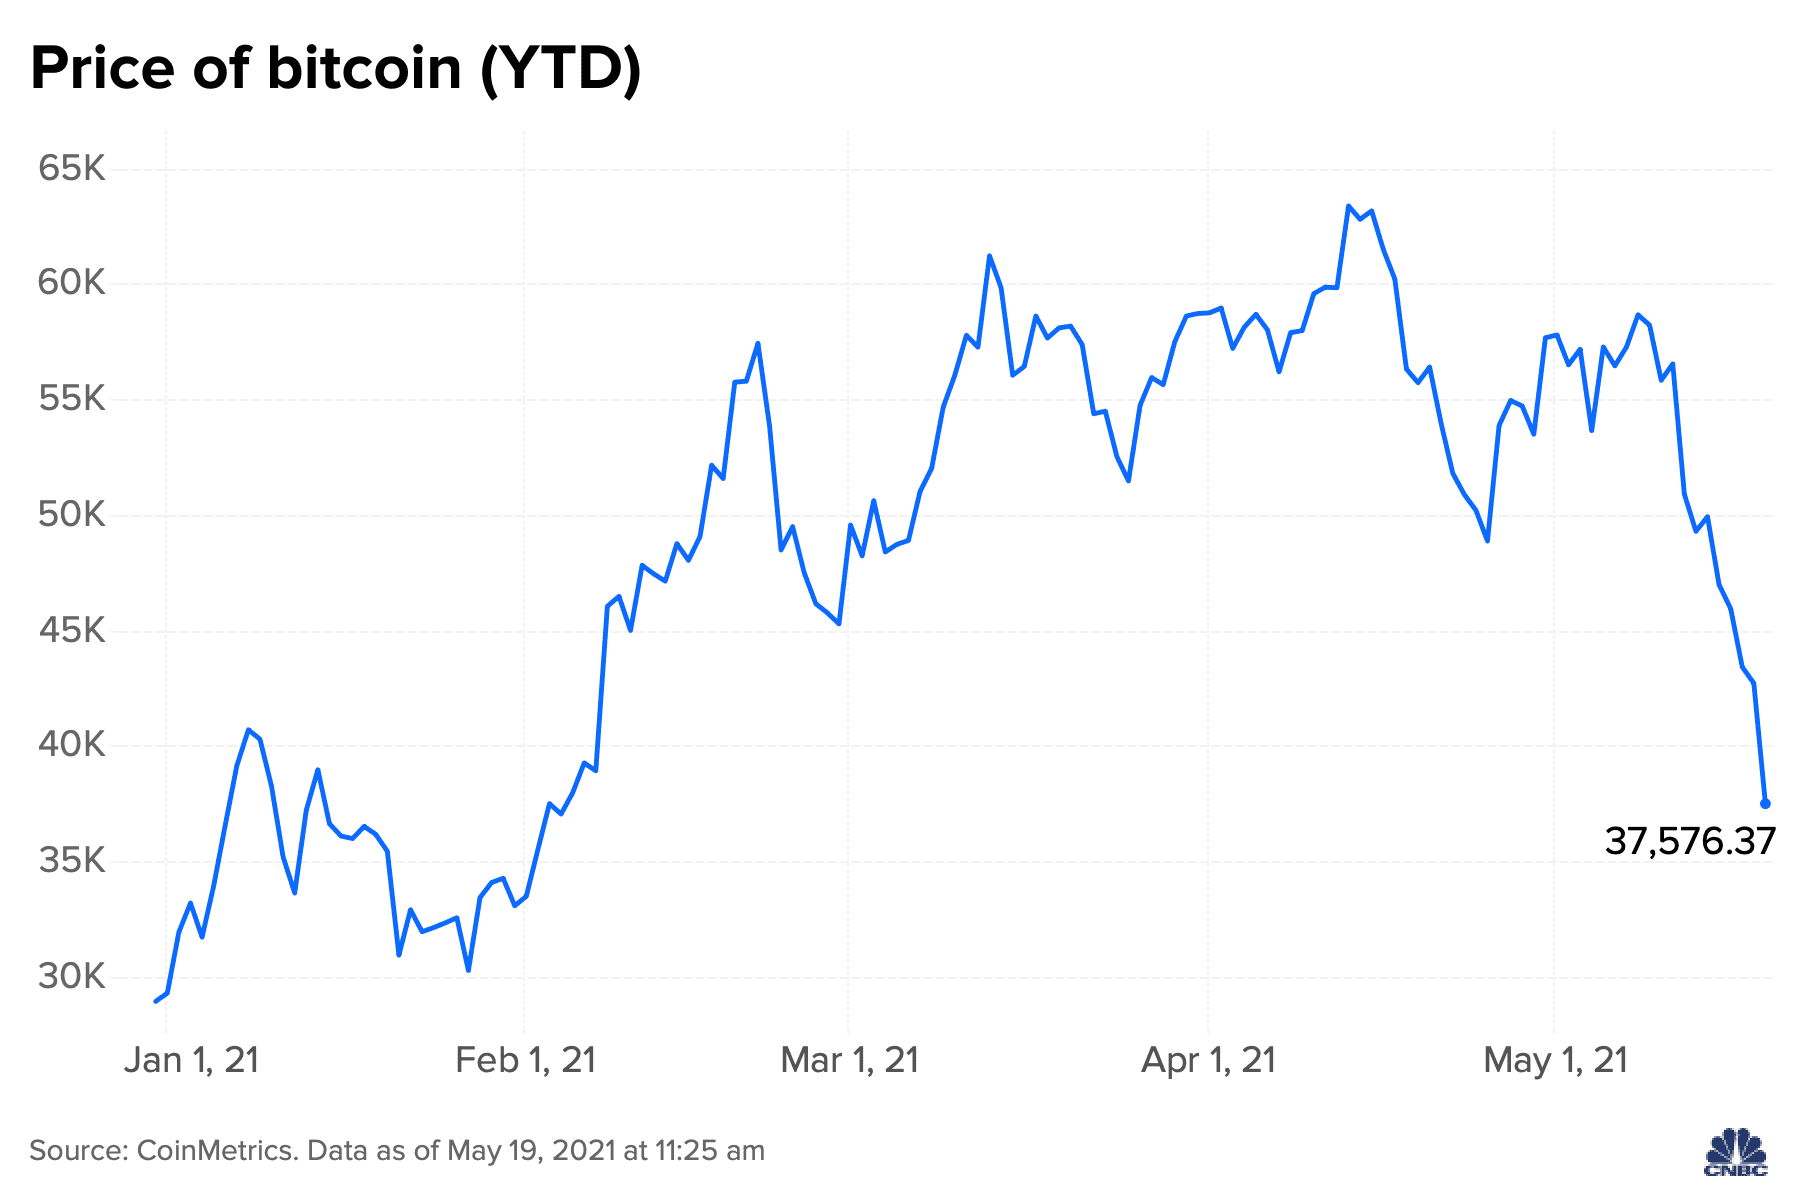 Bitcoin (BTC) Price Falls While SOL Outperforms